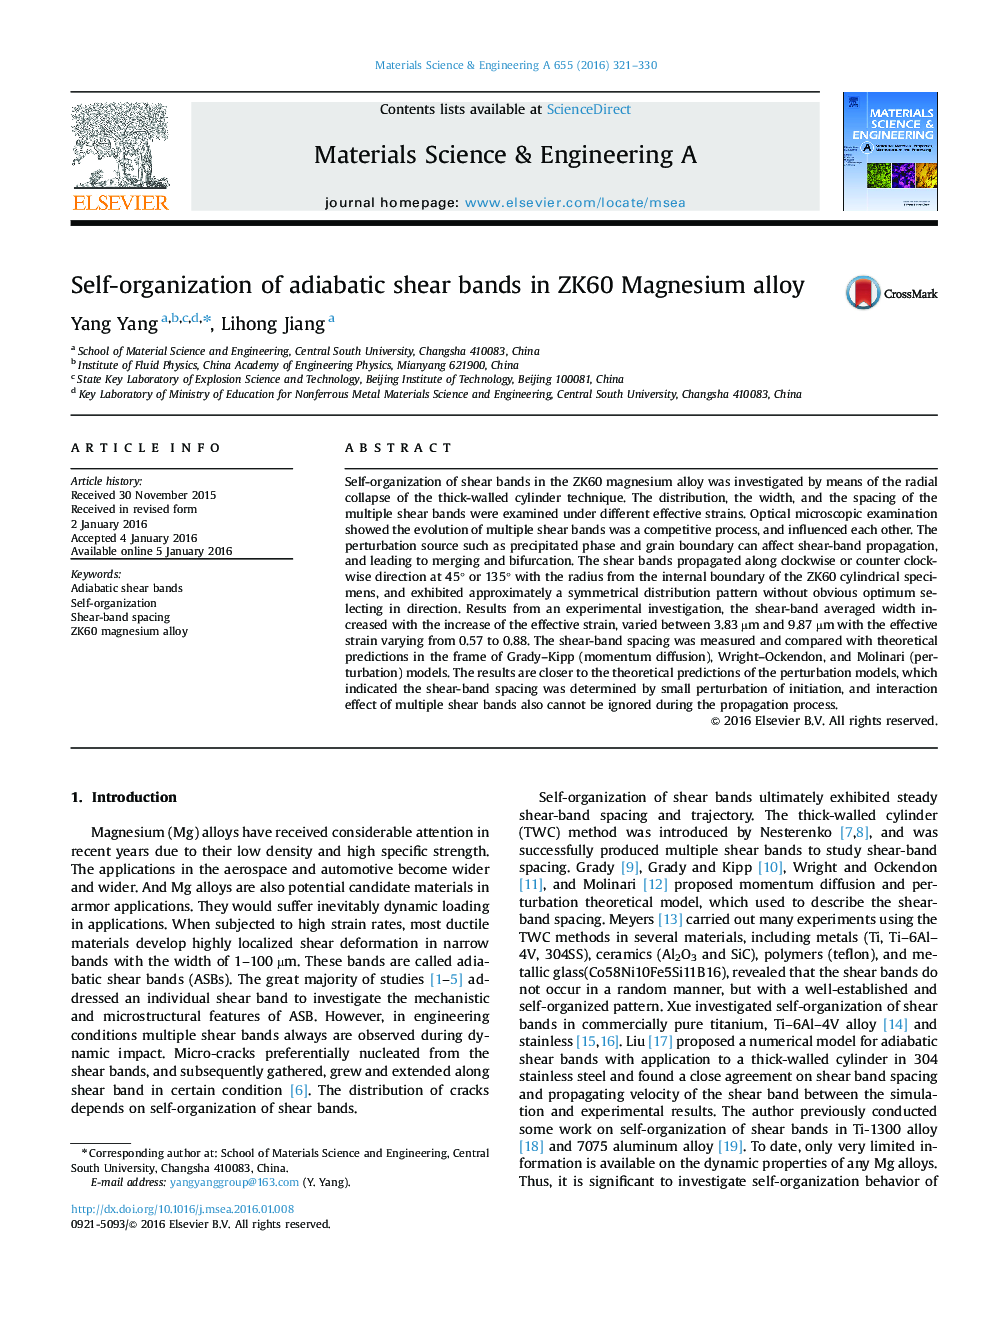 Self-organization of adiabatic shear bands in ZK60 Magnesium alloy